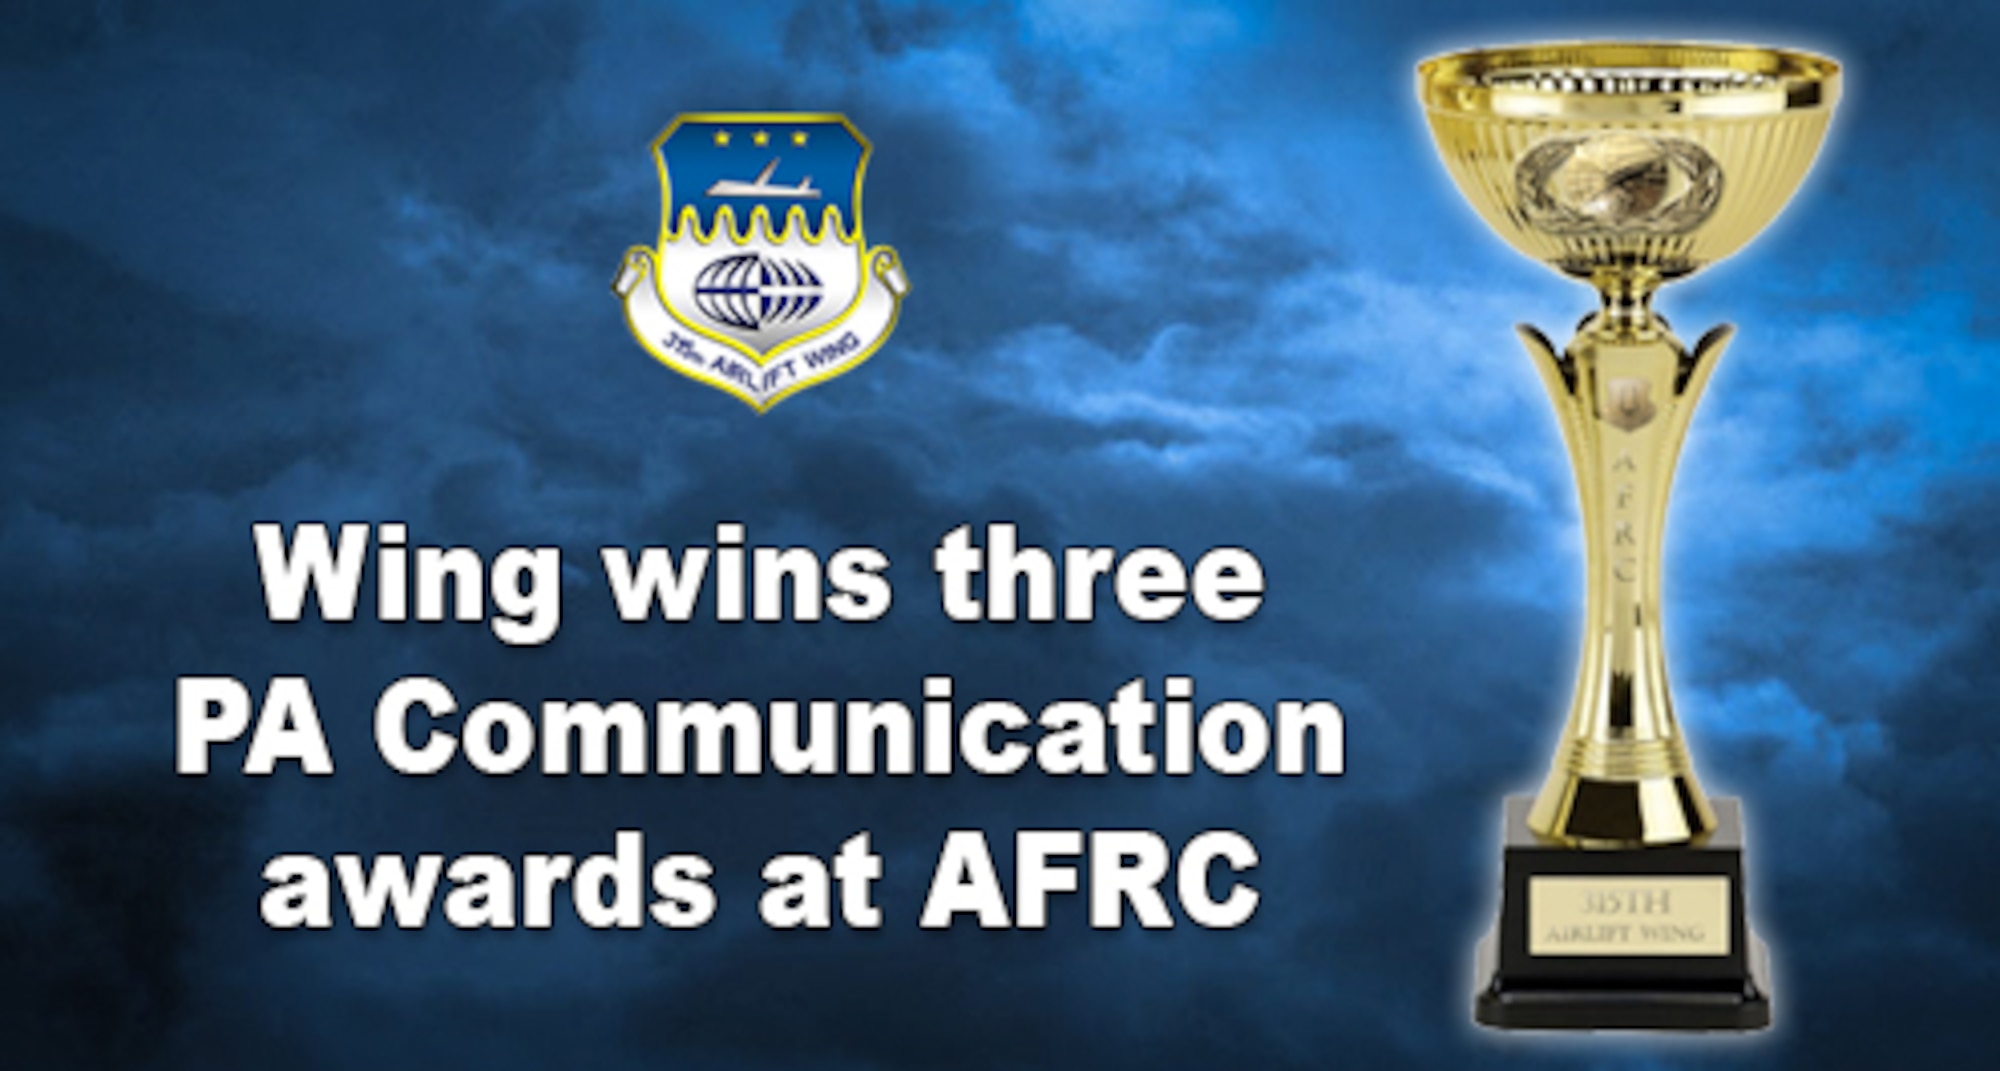 Wing wins PA Communication awards at AFRC